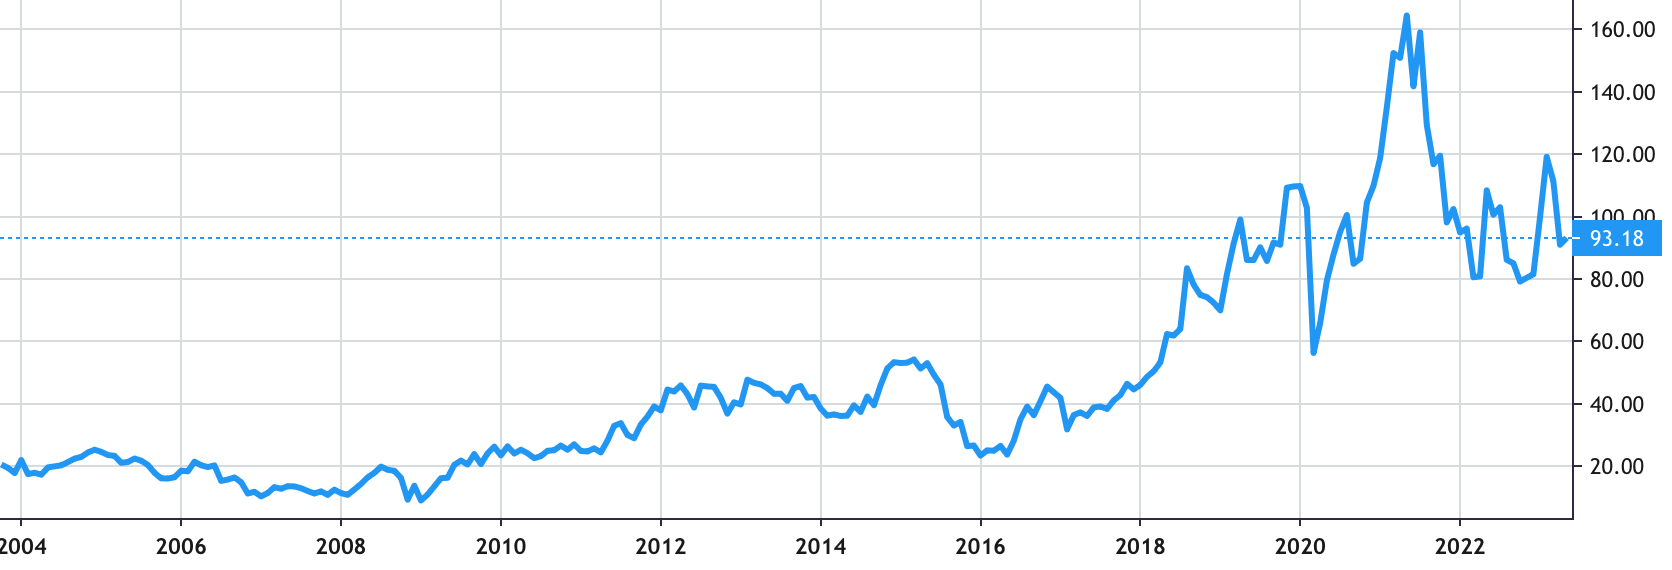 America's Car-Mart share price history